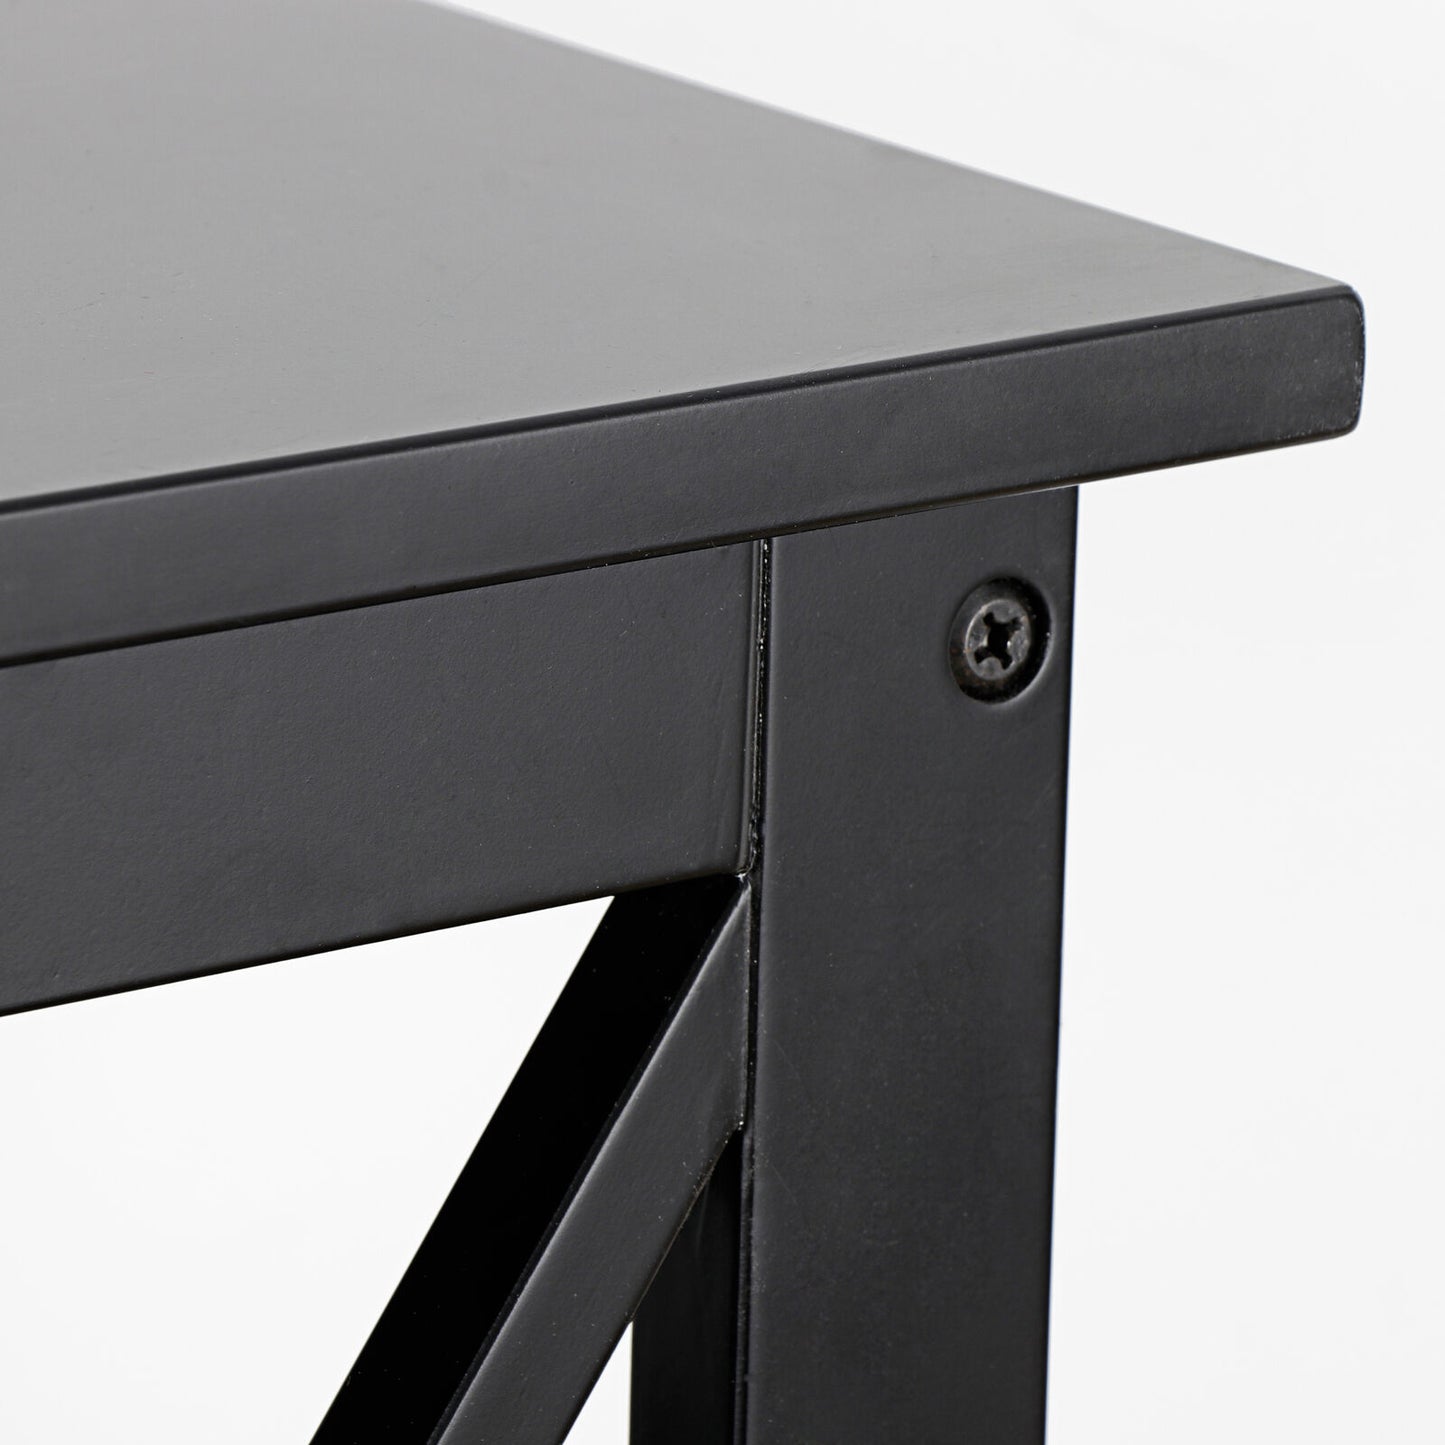 3-Tier End Table w/ Storage Shelves Versatile X-Design Sofa Side Table Furniture